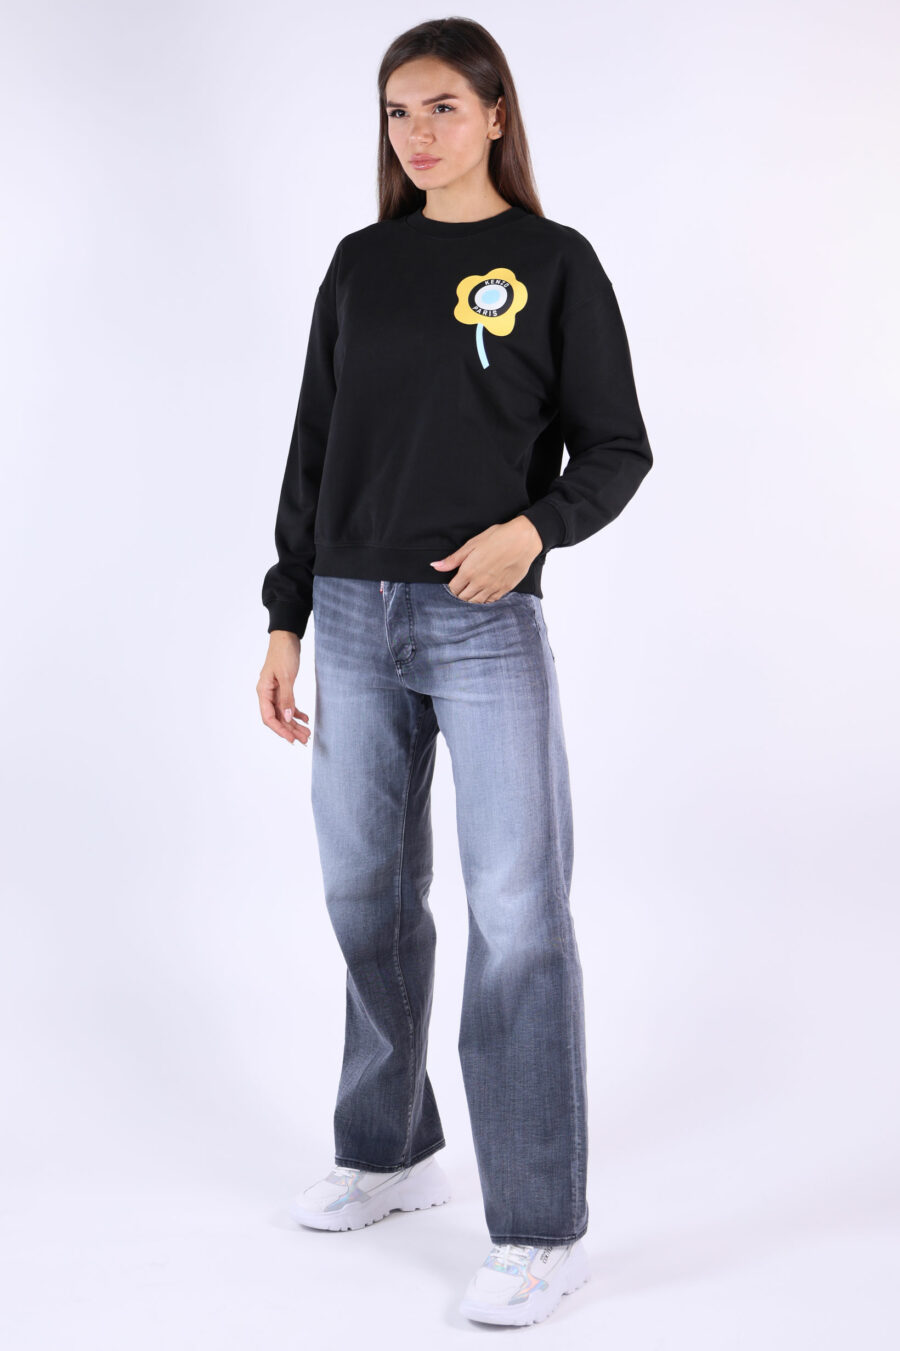 Schwarzes Sweatshirt mit gelbem "kenzo target" Logo - 361223054662202009